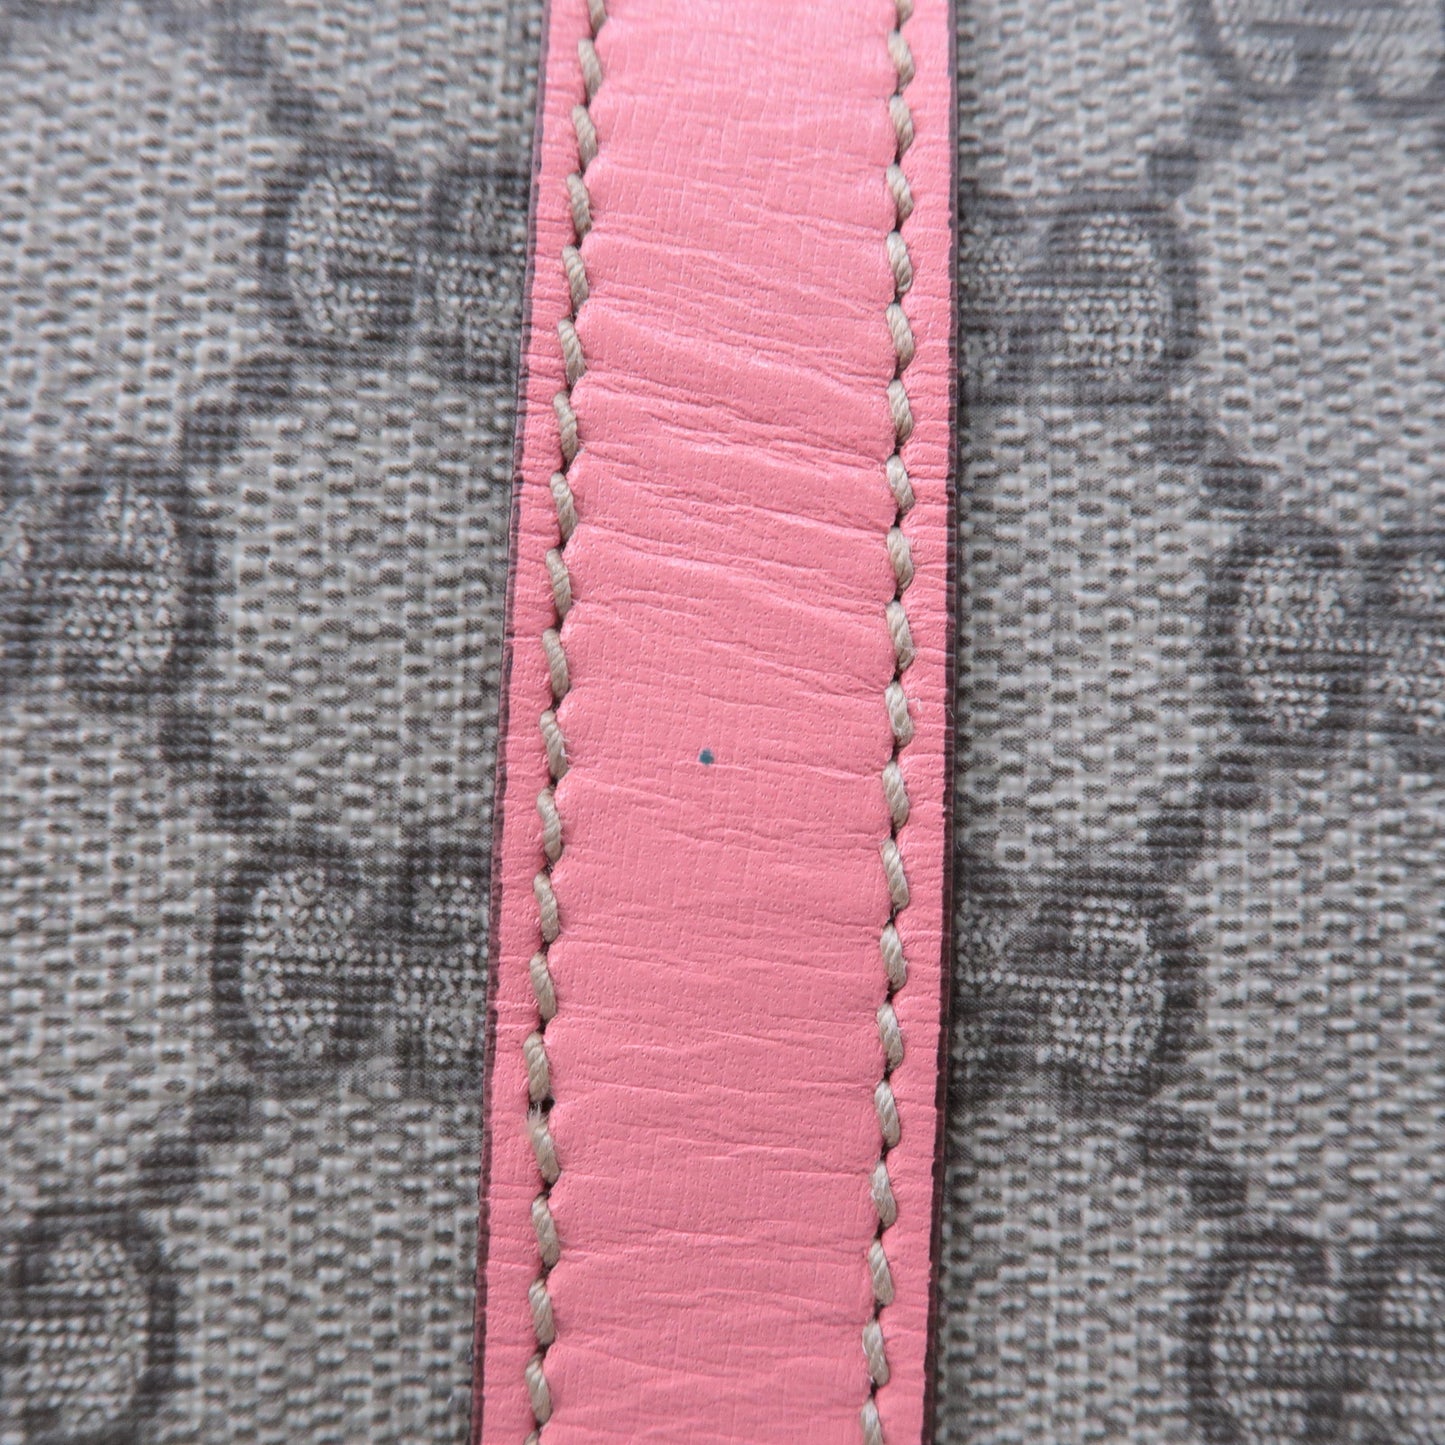 GUCCI GG Supreme Leather Boston Bag Beige Pink 193603